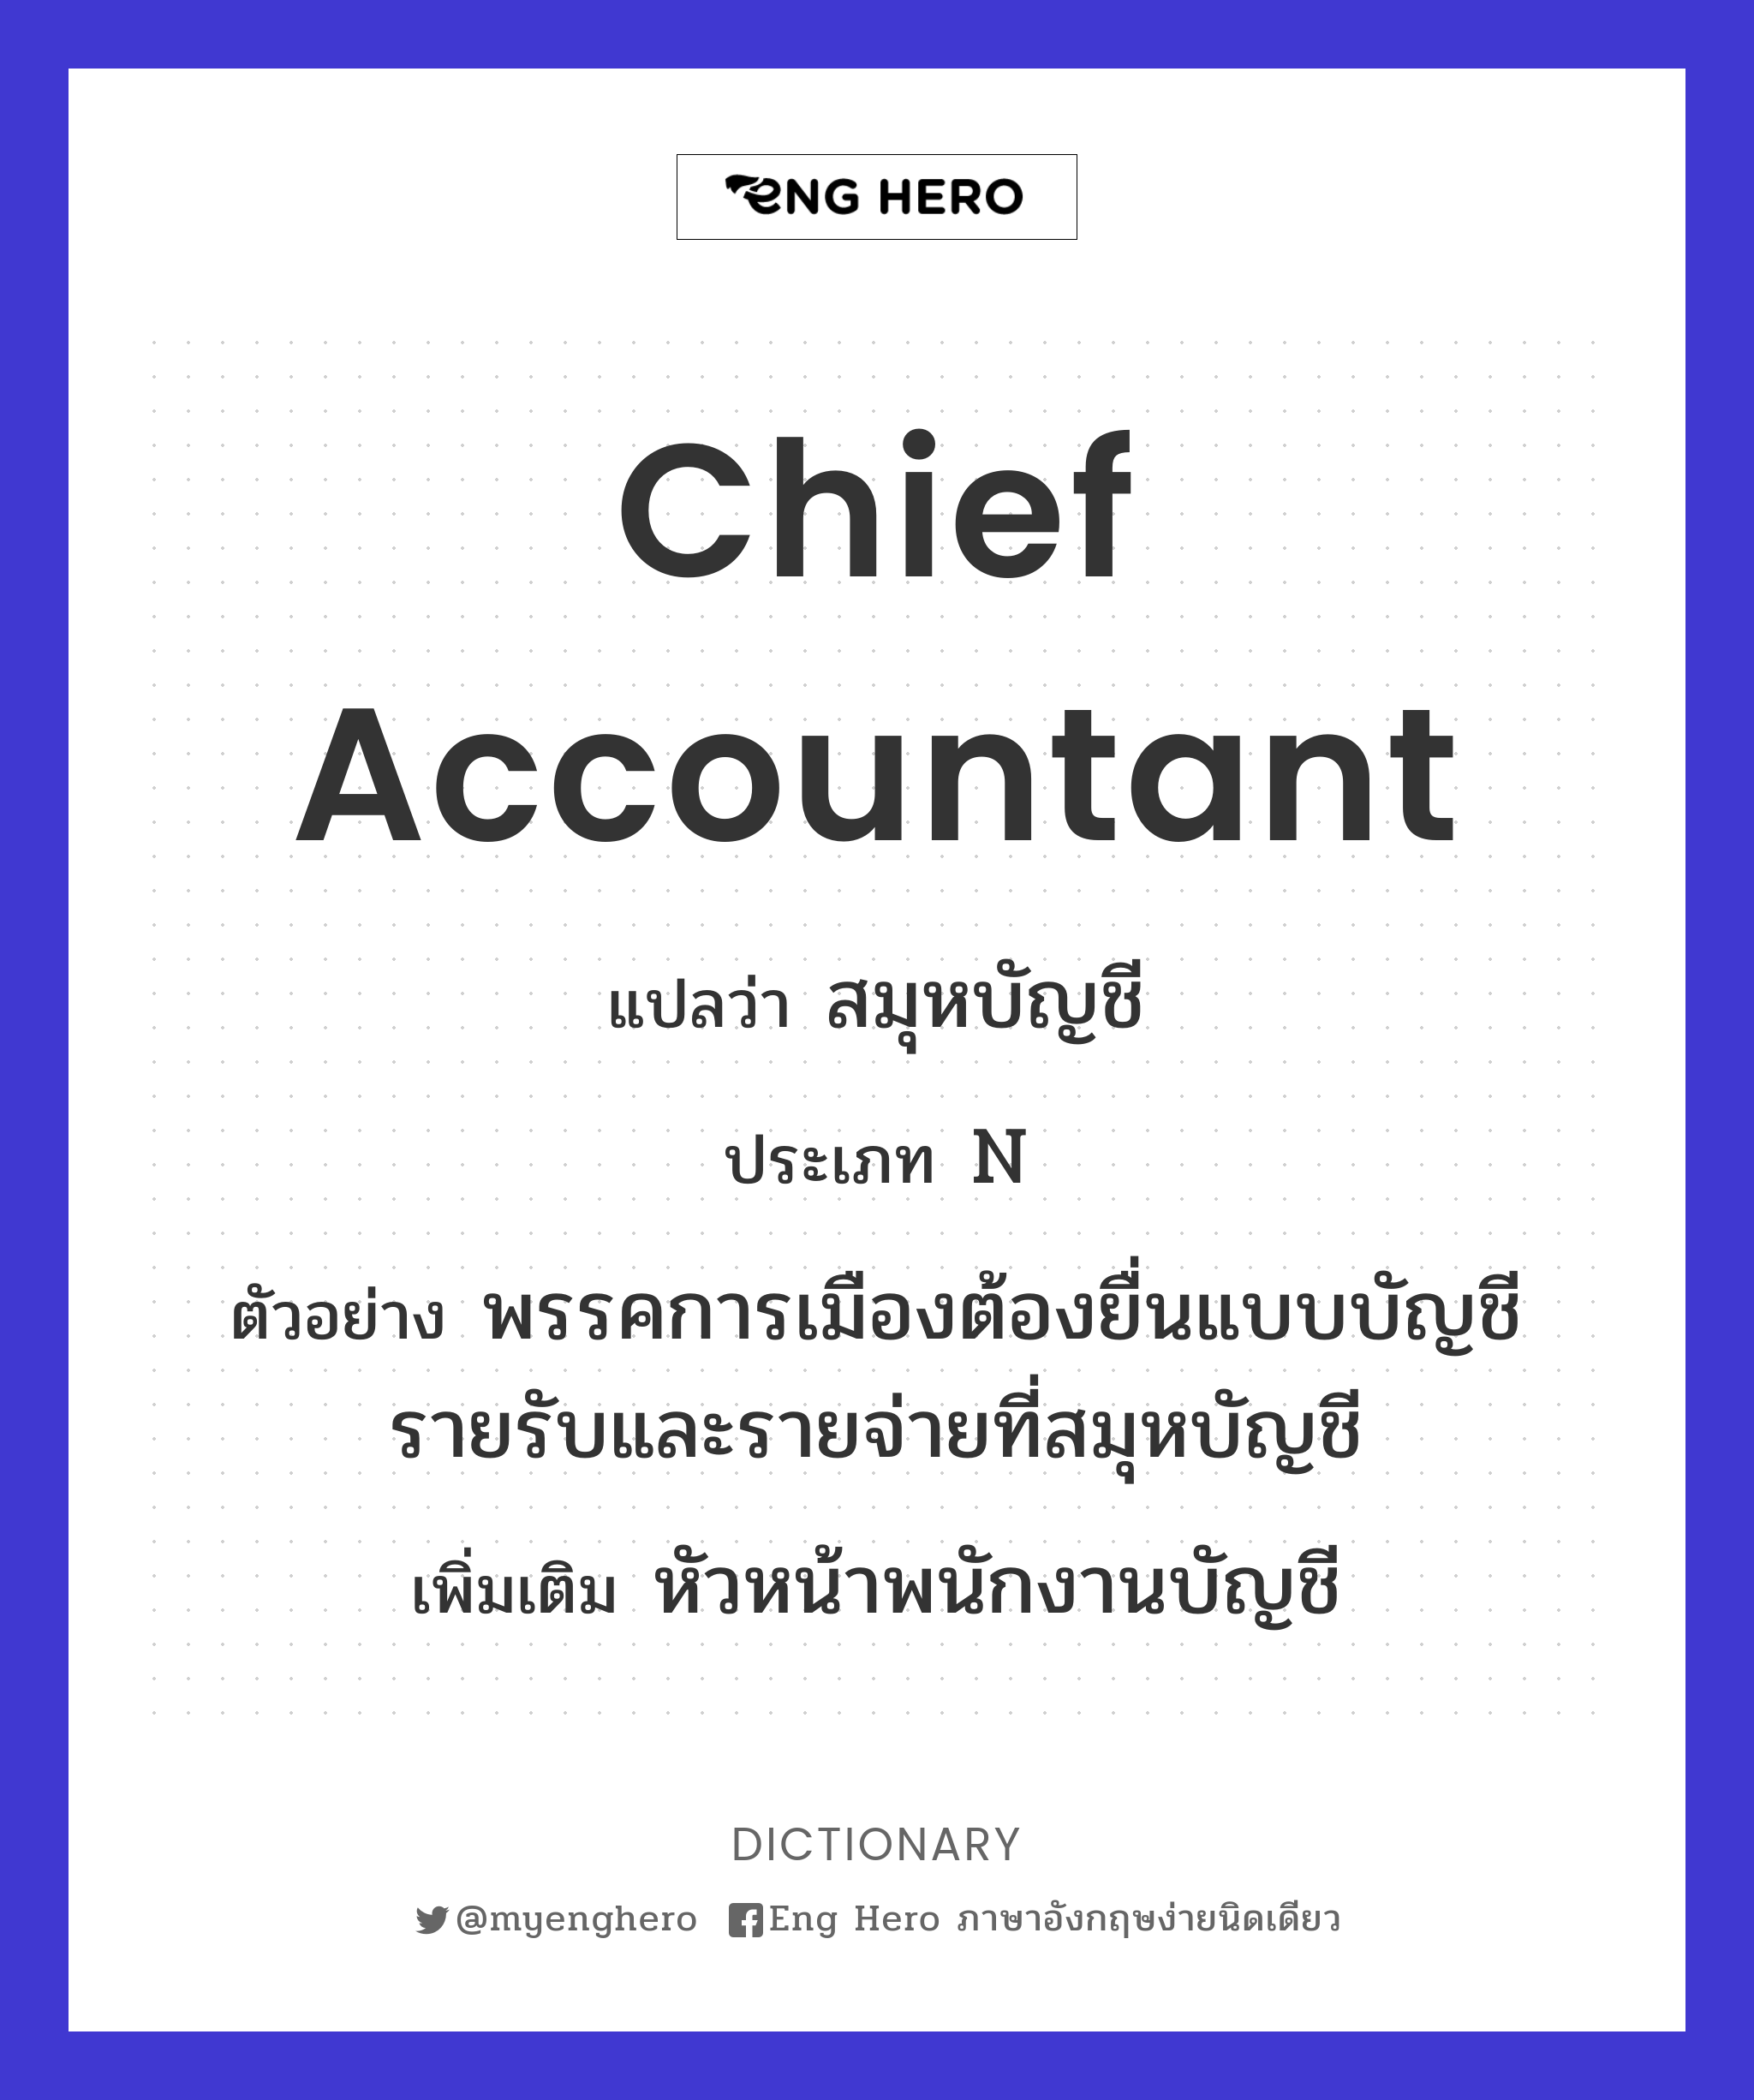 chief accountant